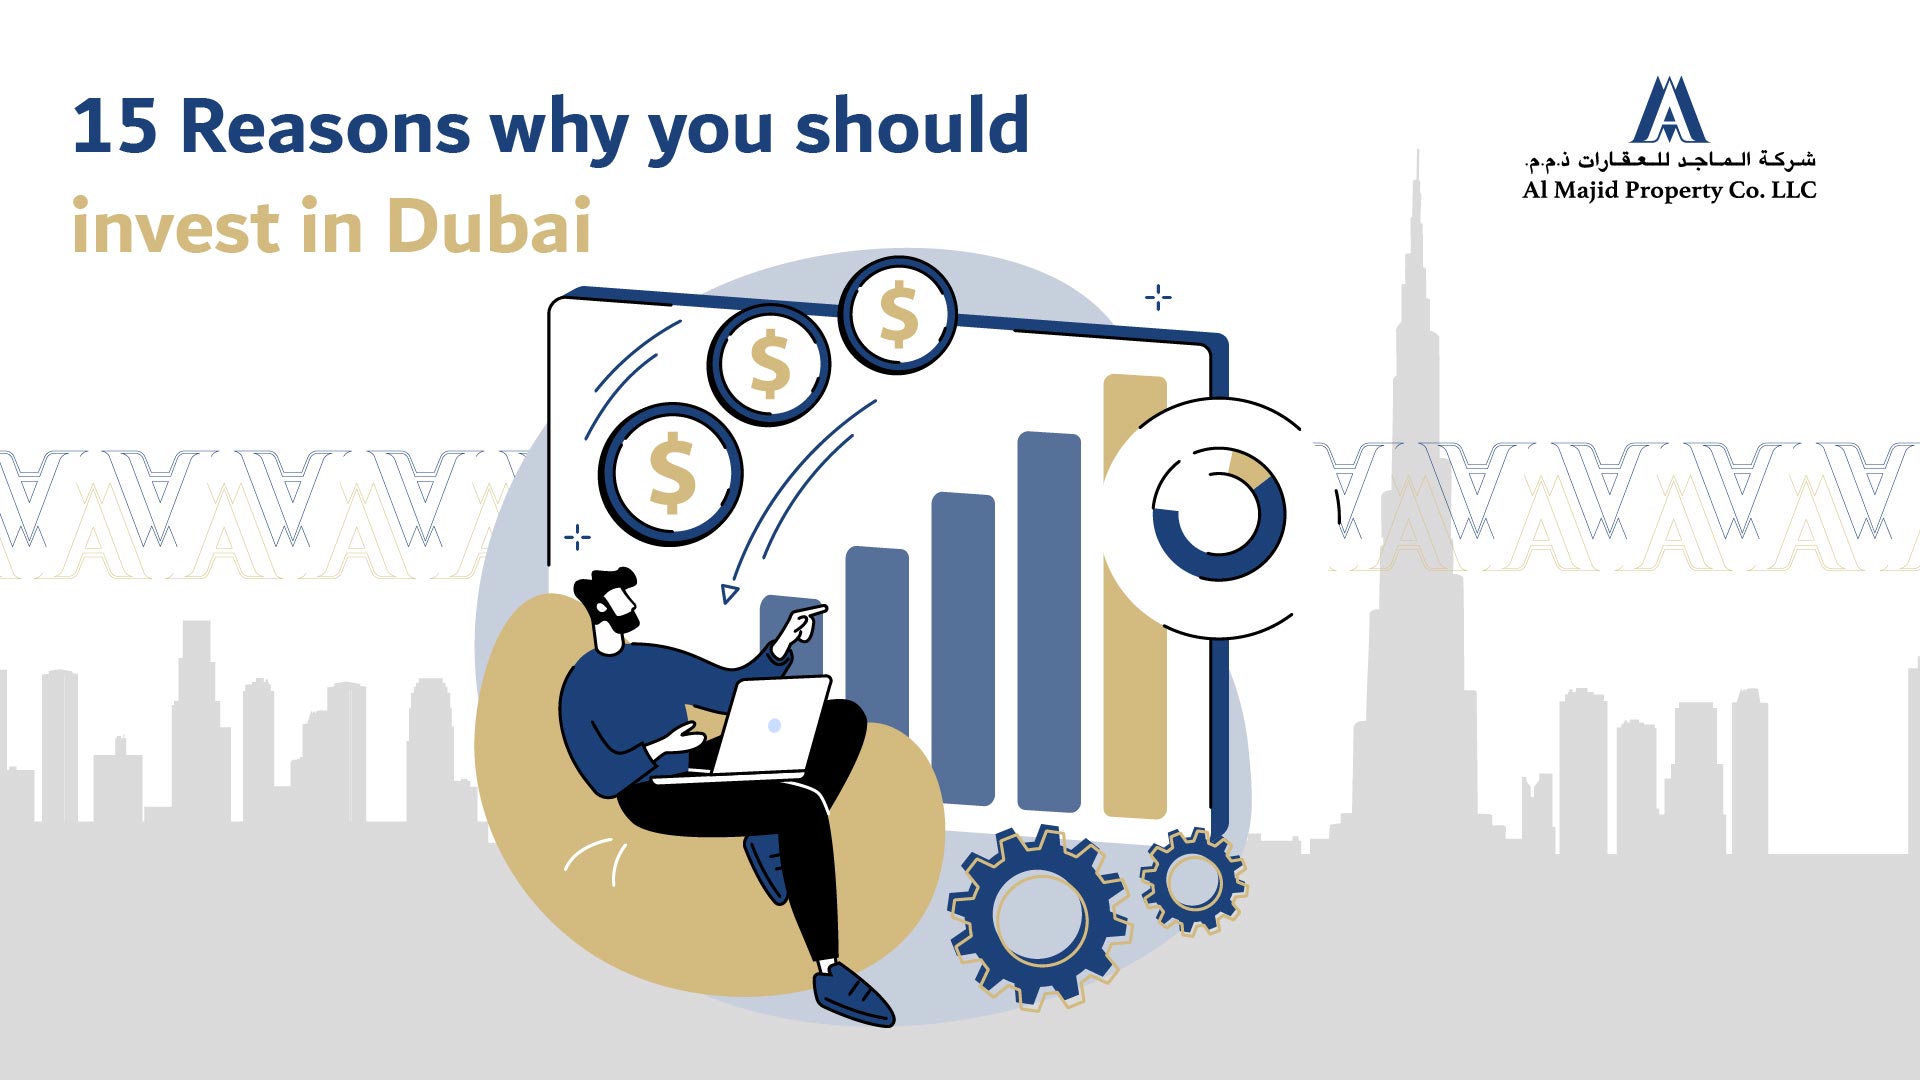 Why invest in Dubai